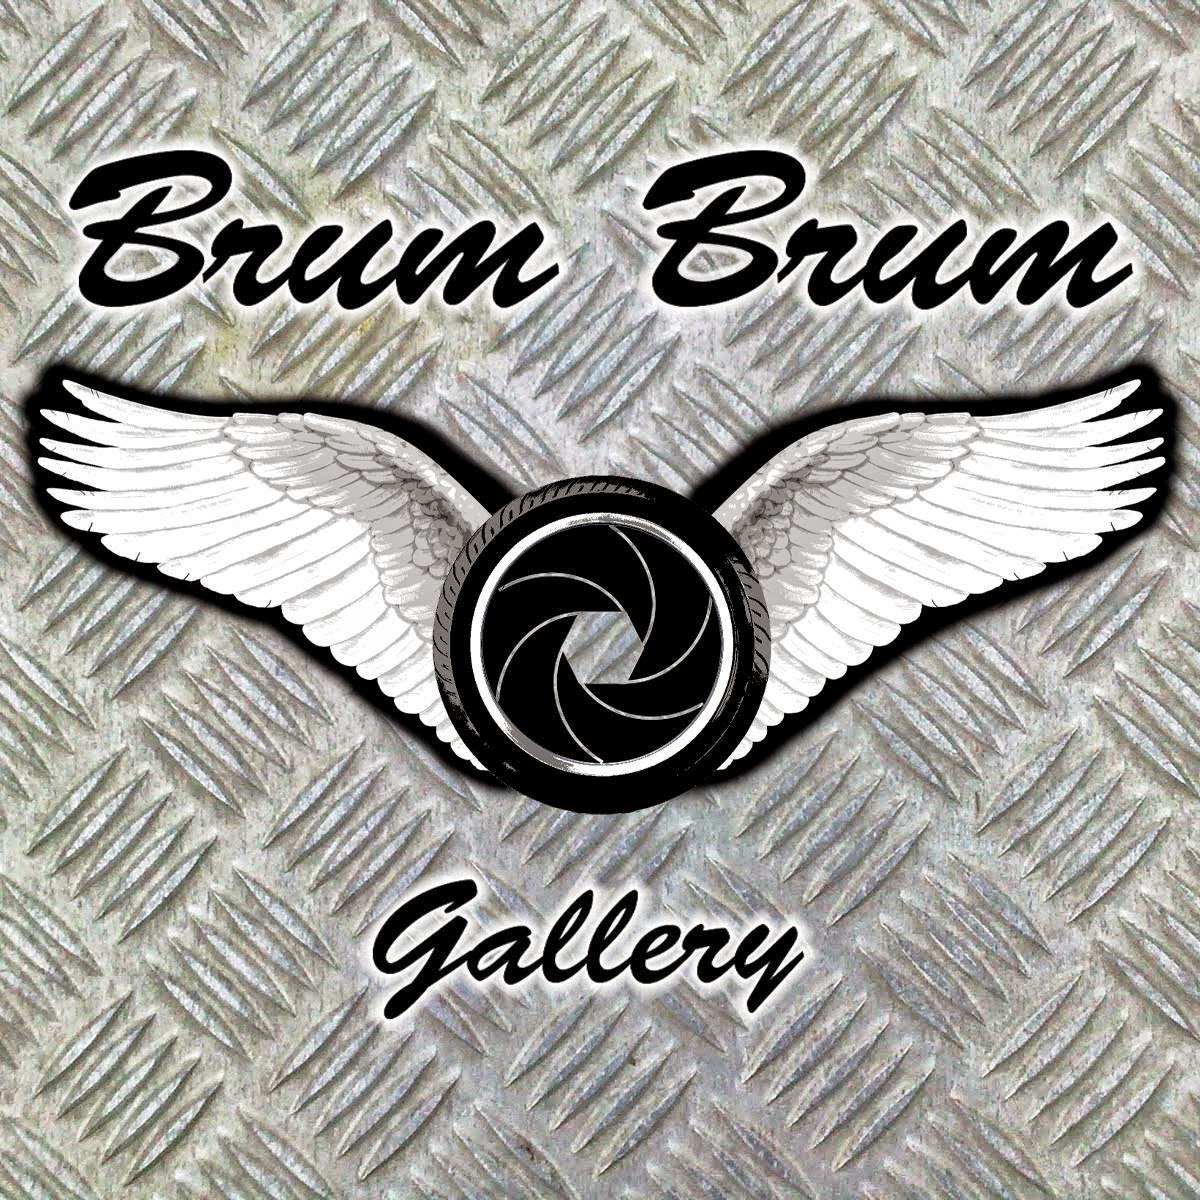 https://www.facebook.com/pages/Brum-Brum-Gallery/251347748384362?fref=ts